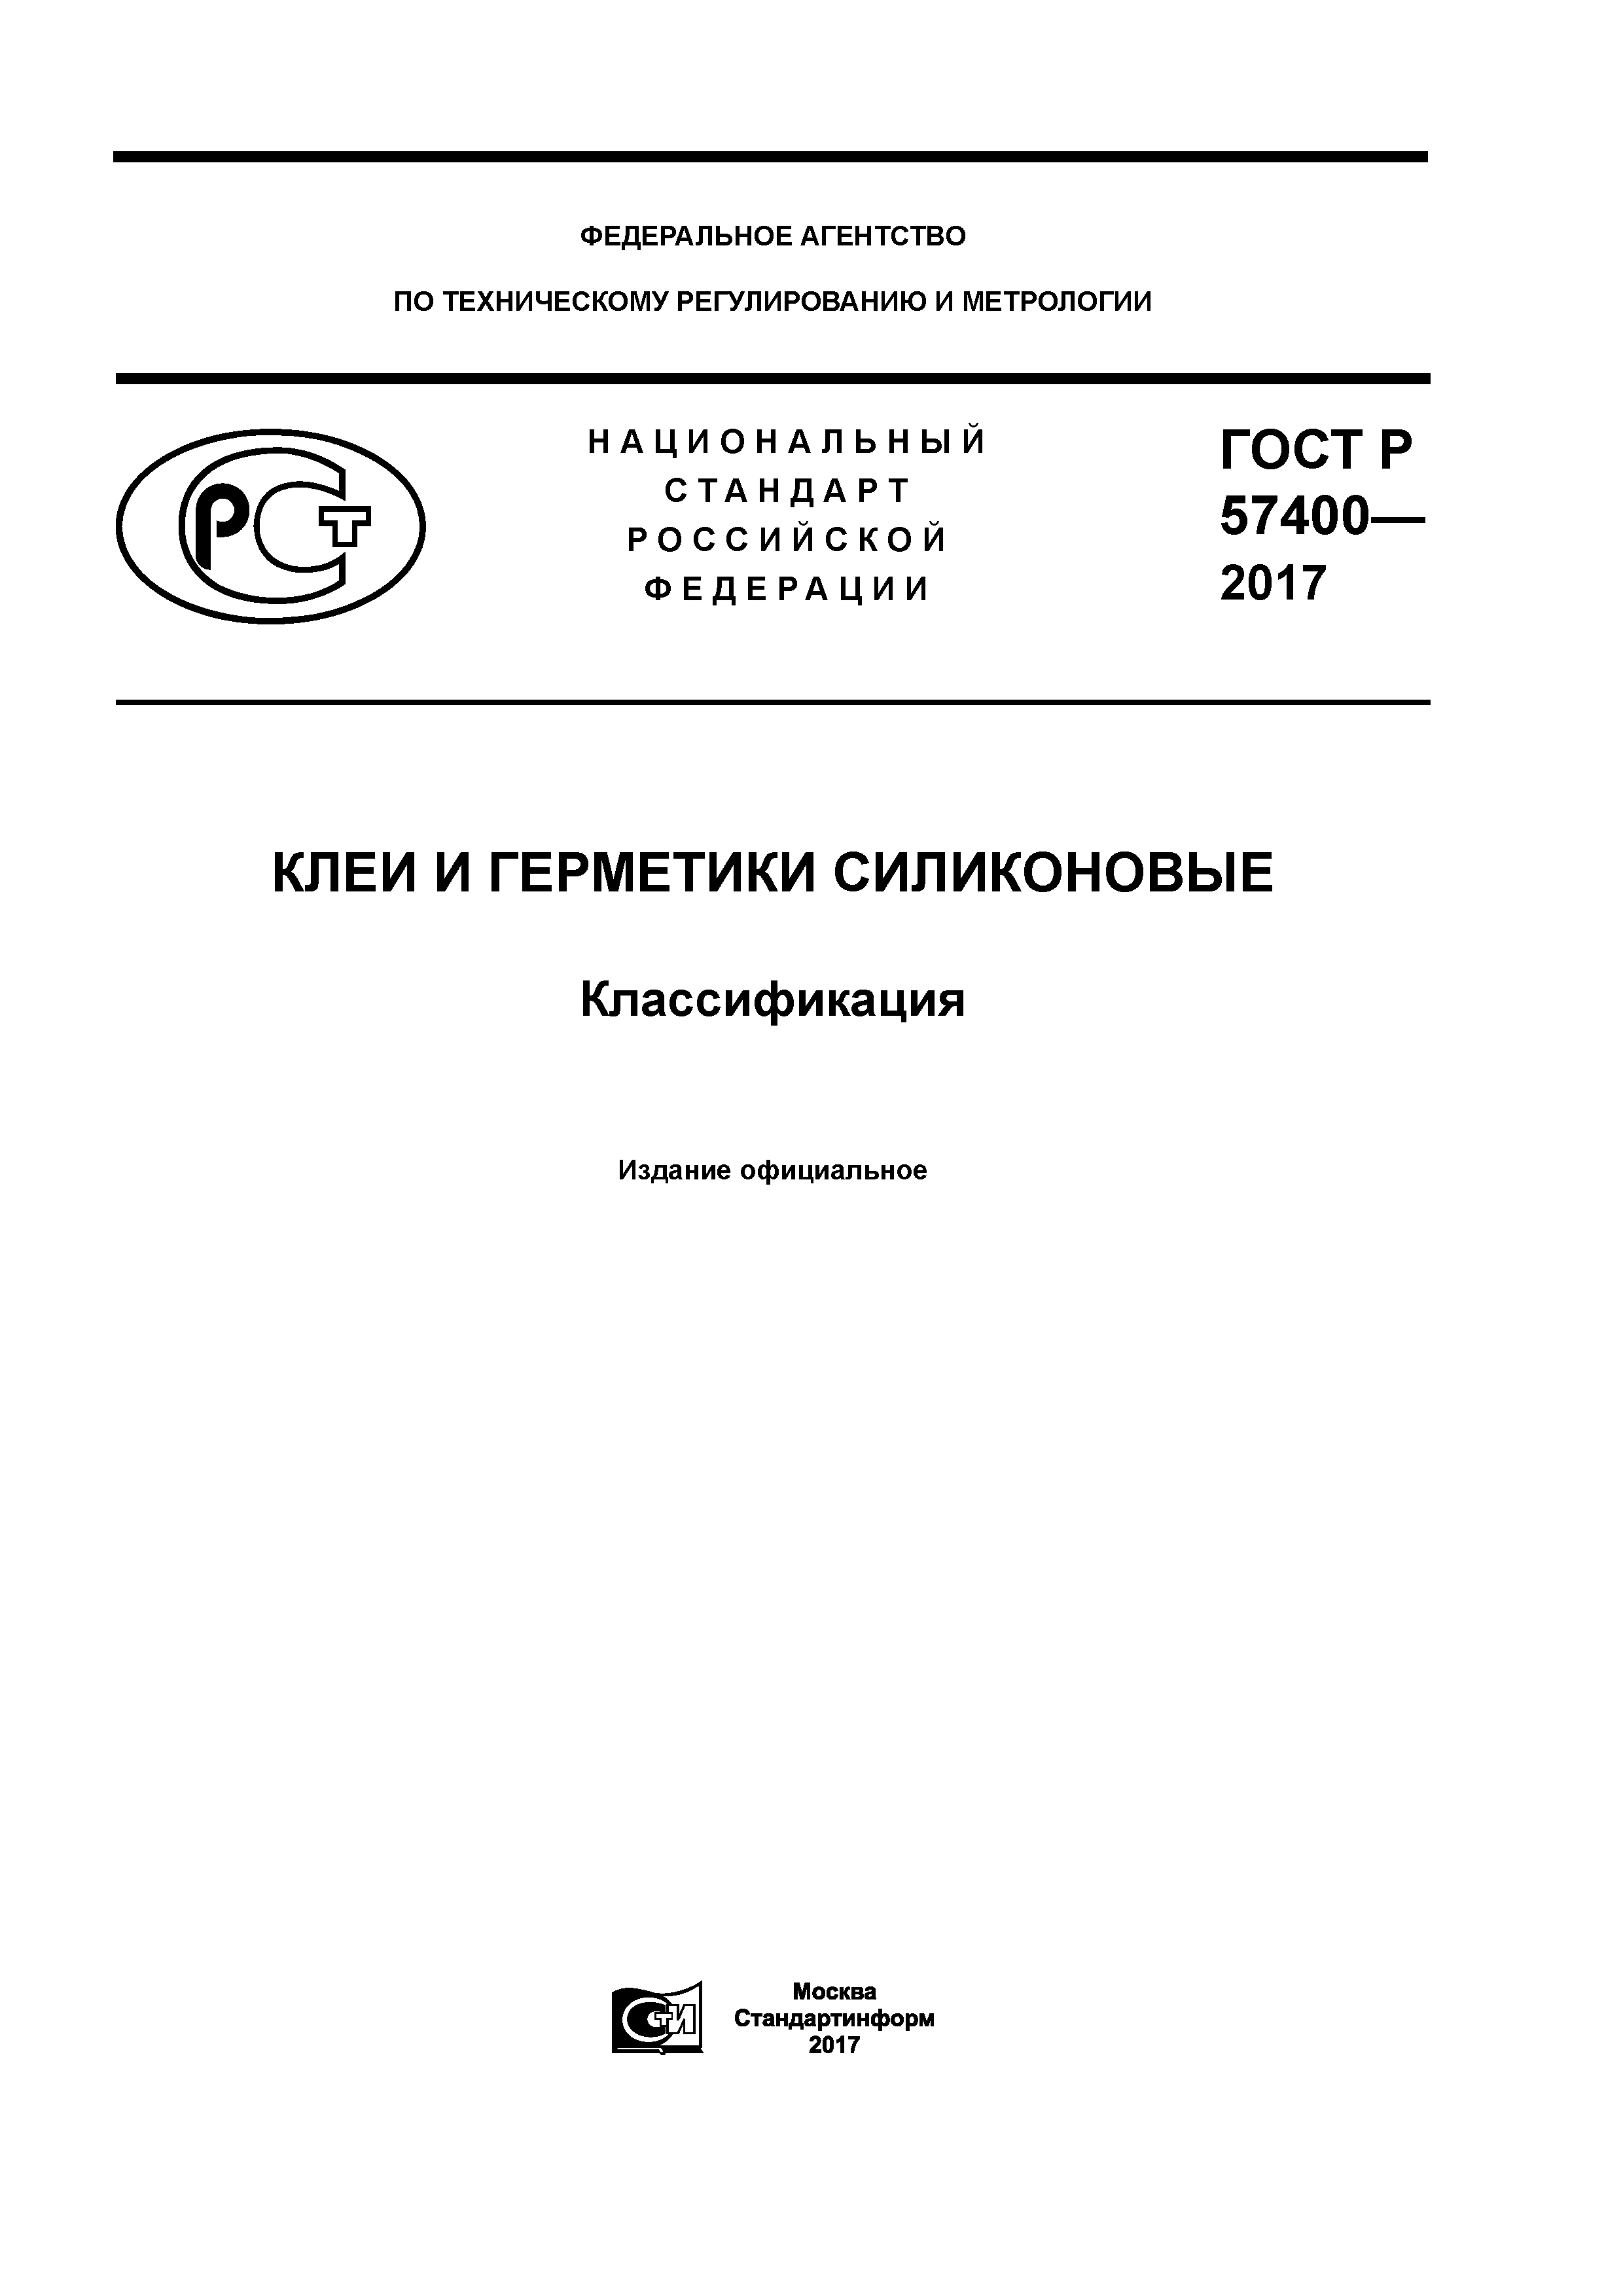 ГОСТ Р 57400-2017